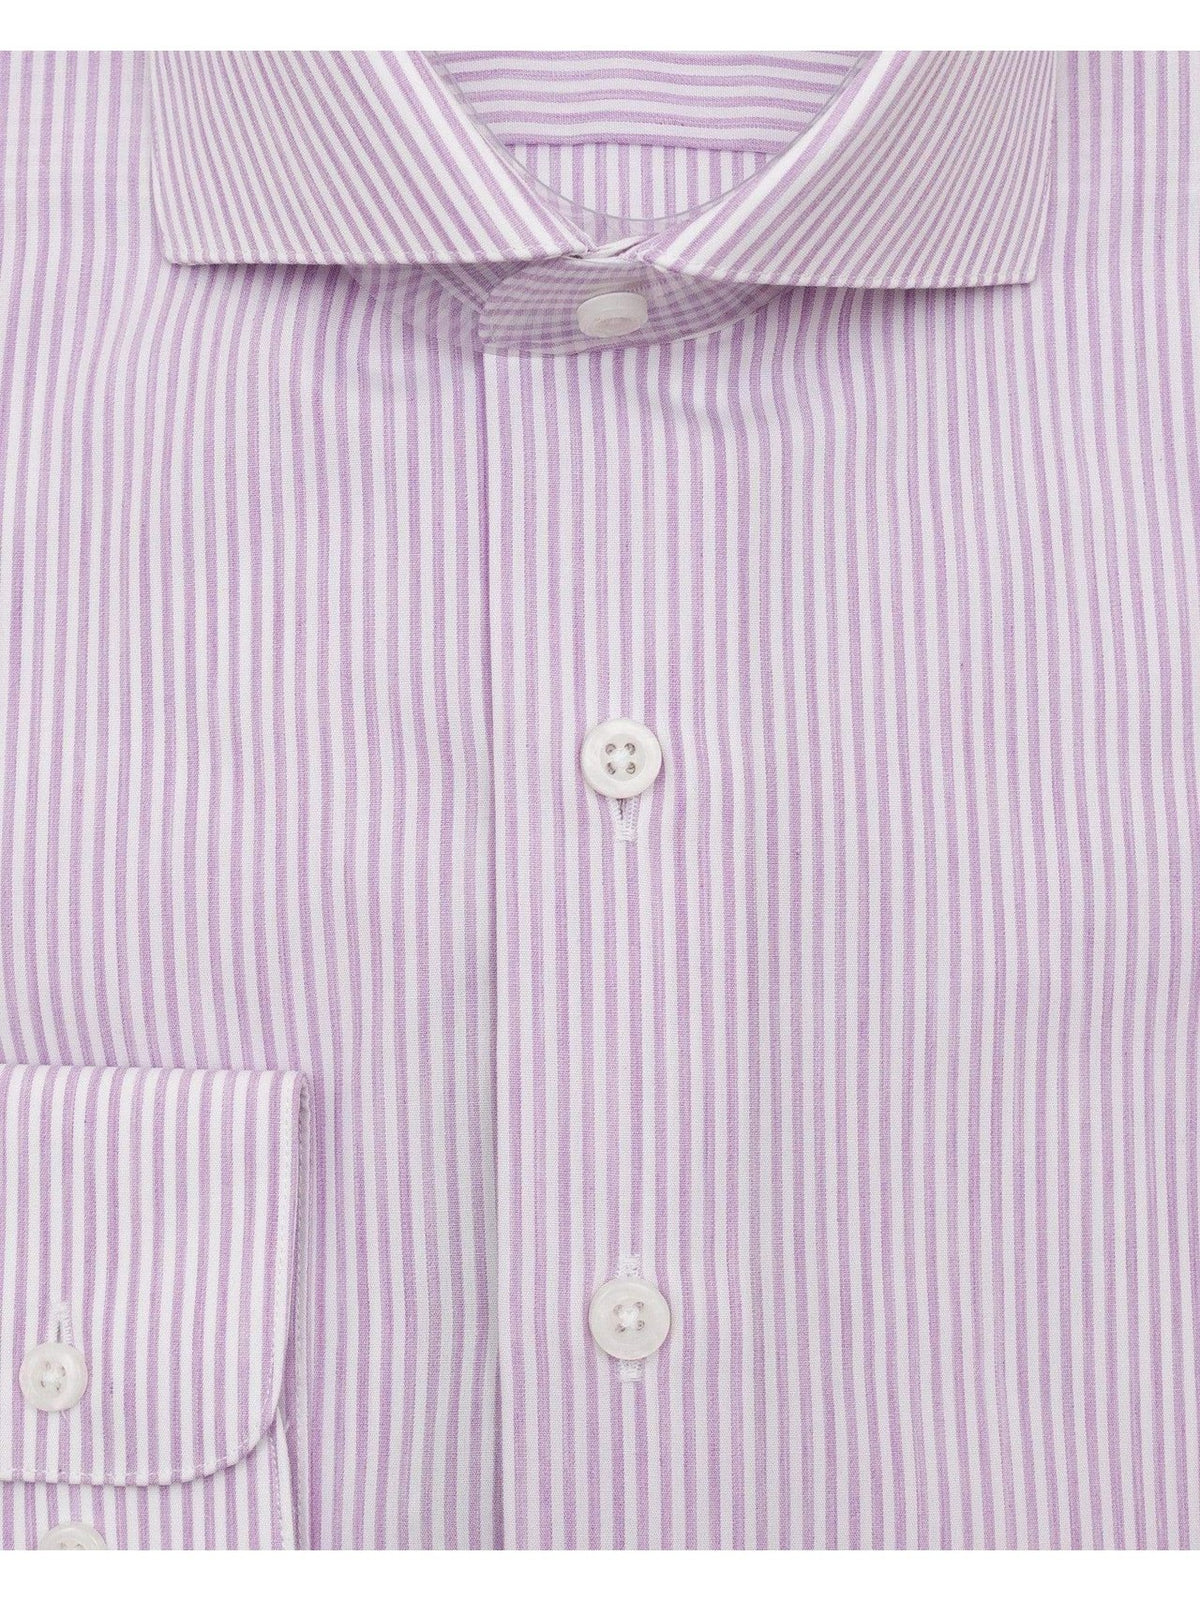 Brand P SHIRTS Mens Cotton Lavender Striped Slim Fit Cutaway Collar Easy Care Dress Shirt